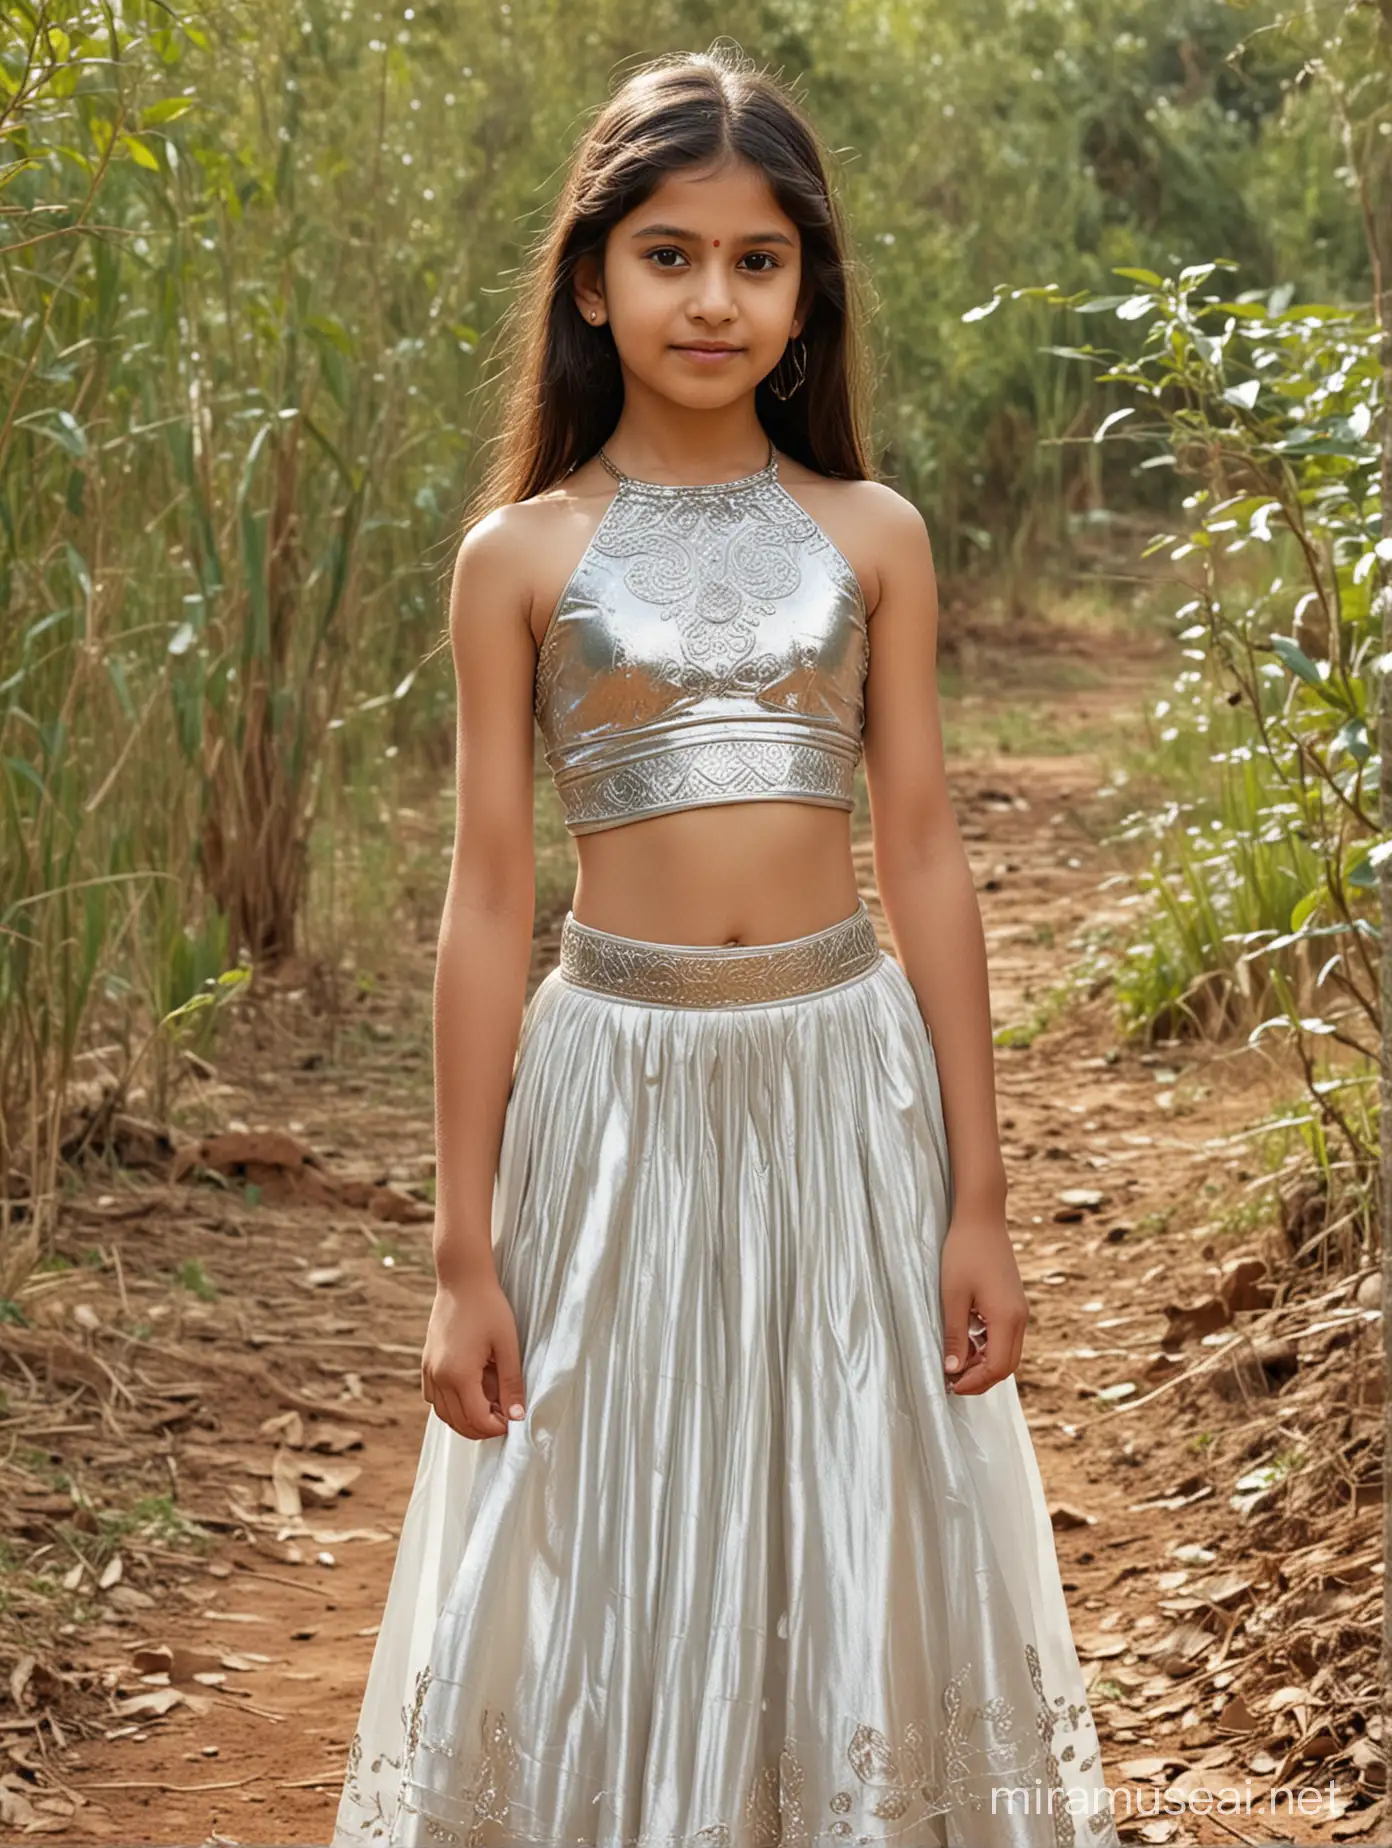 11 years old girl, white skin, beautiful, wearing metallic very thin halter neck very thin choli with lehenga, her front view, in nature